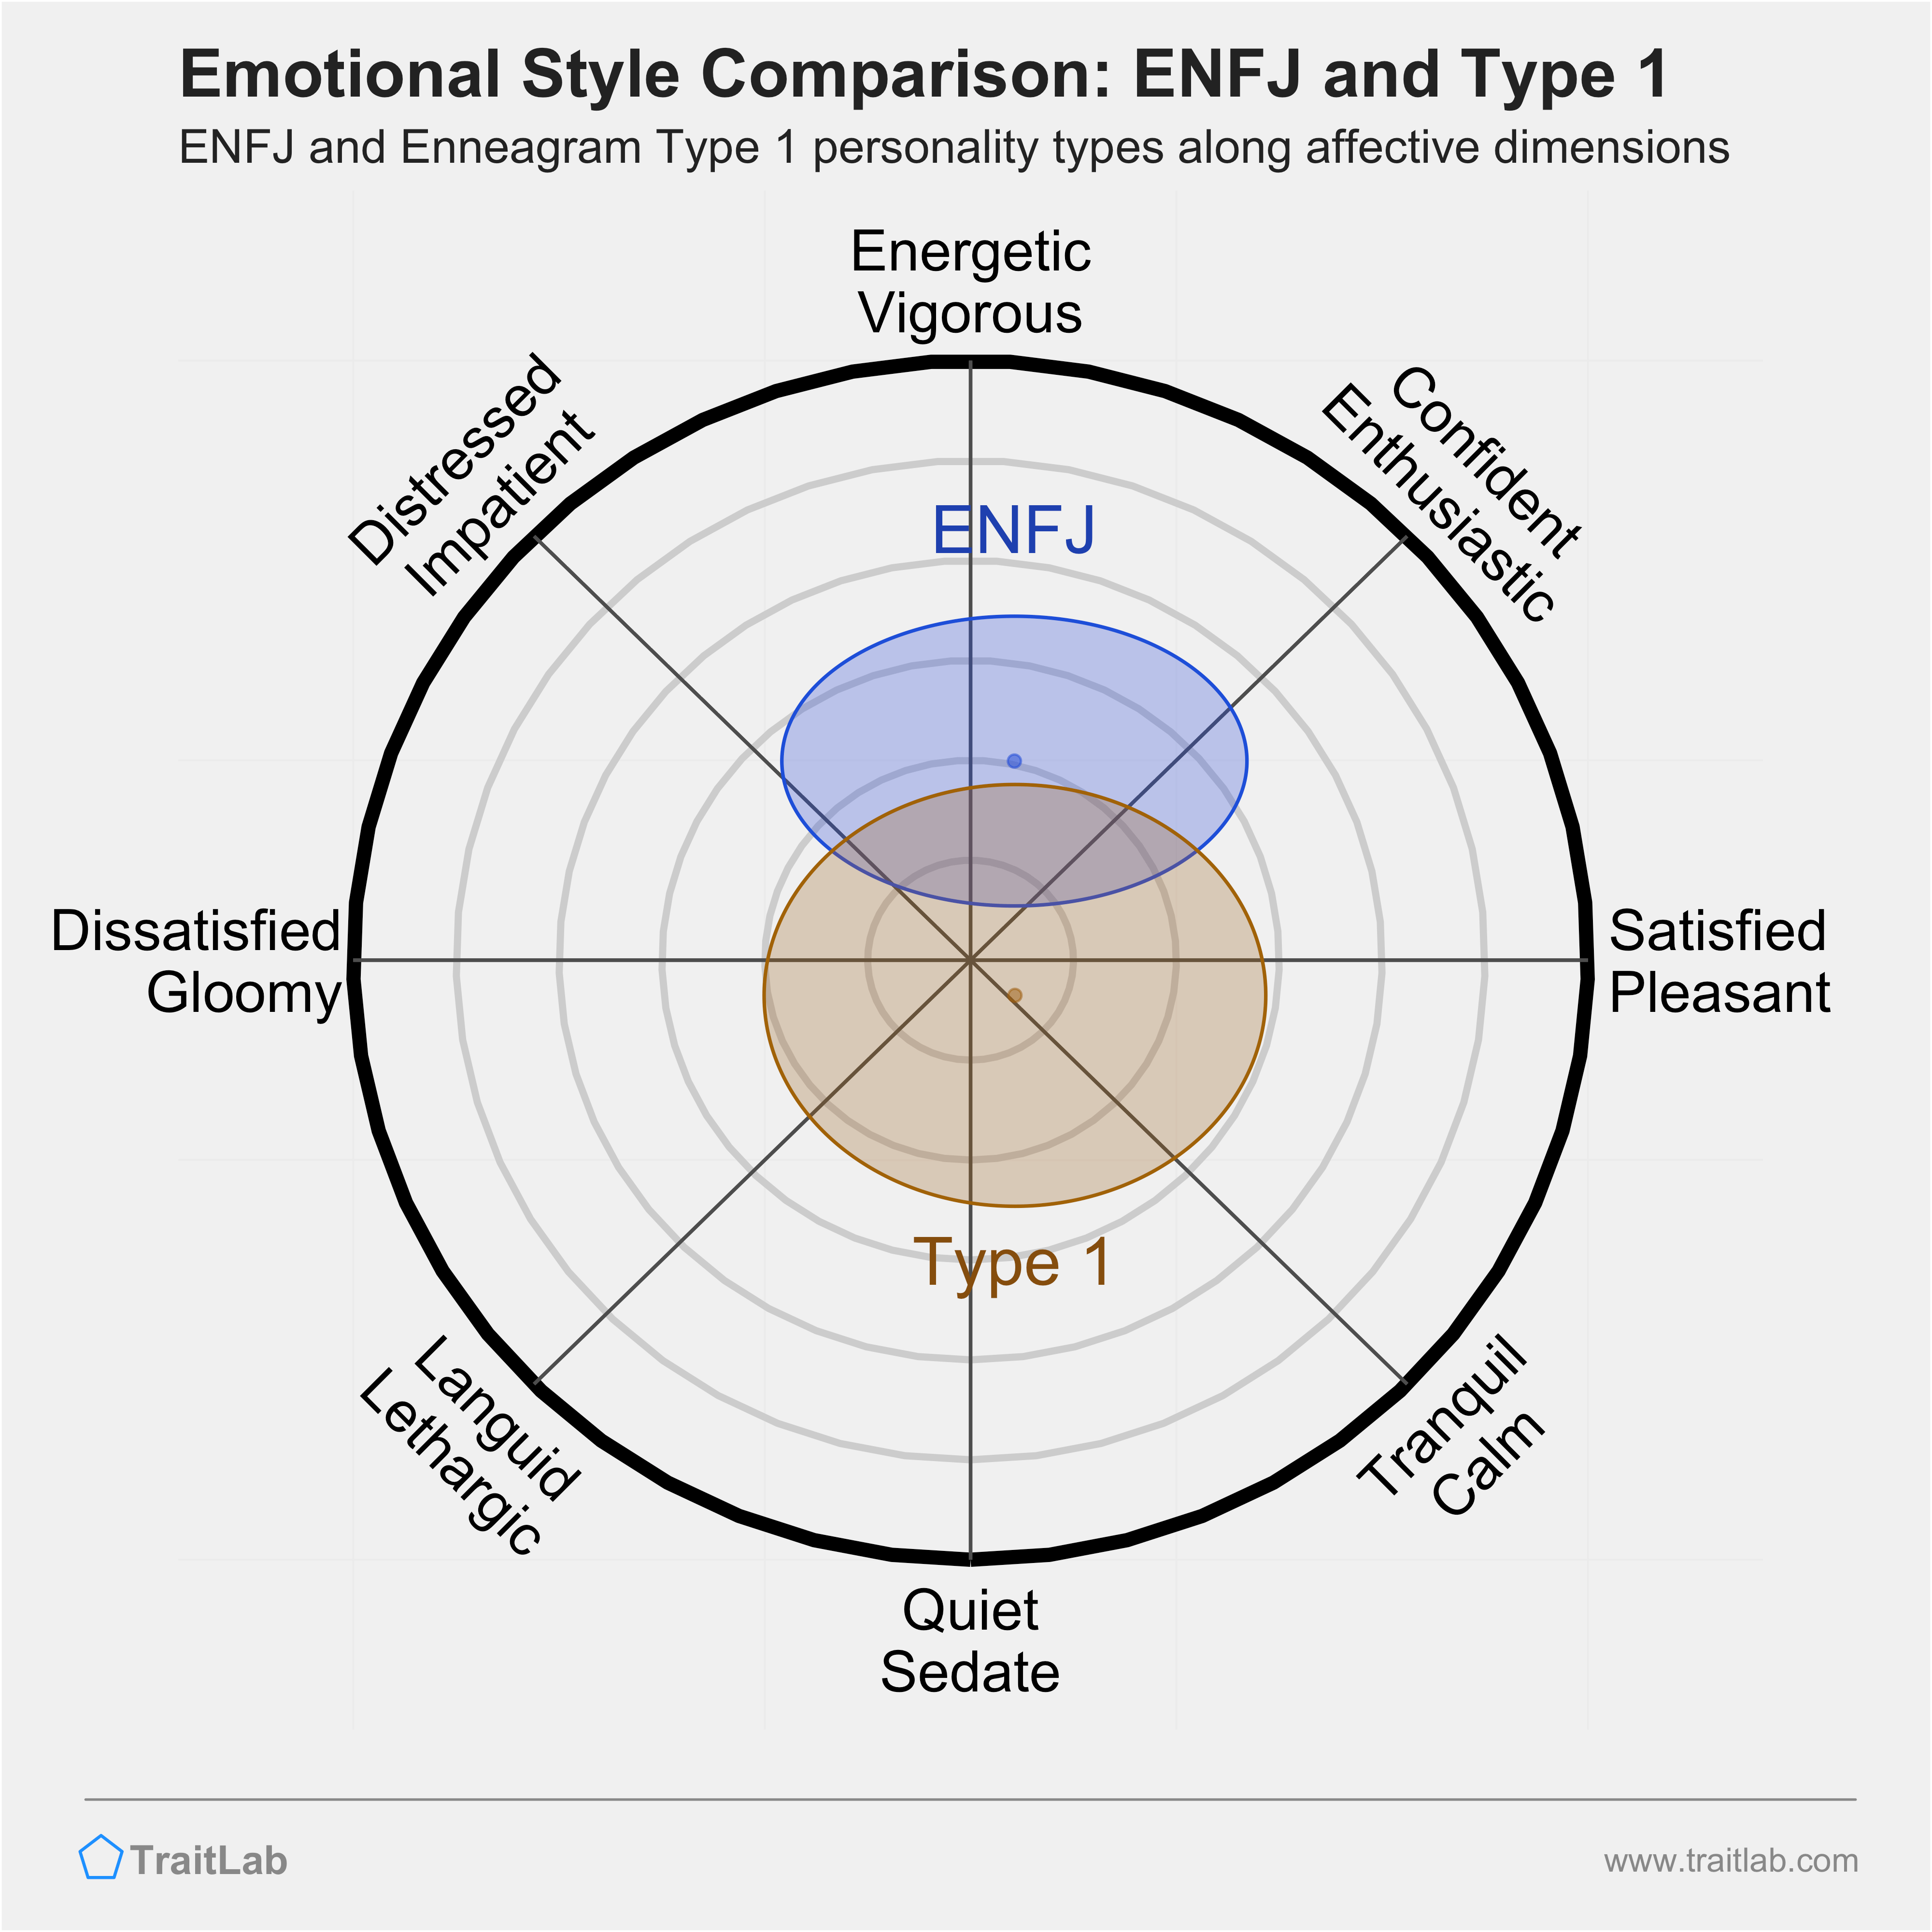 ENFJ and Type 1 comparison across emotional (affective) dimensions